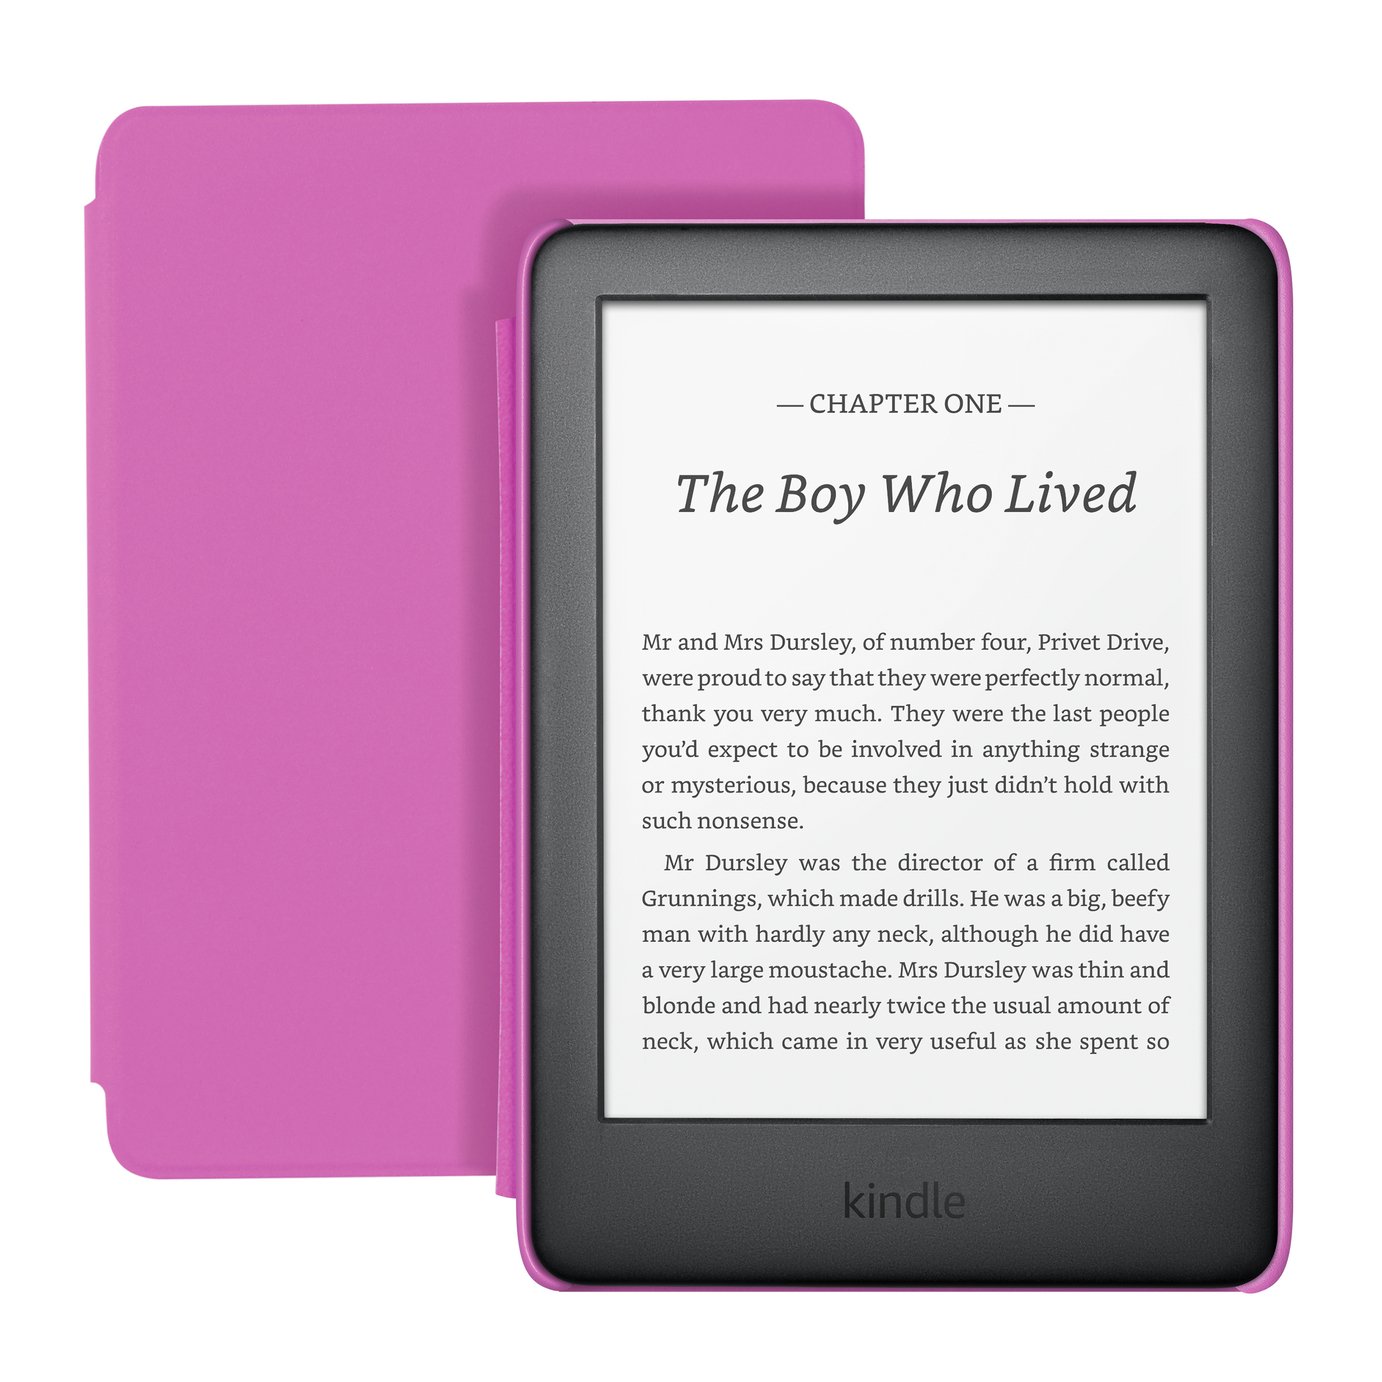 Kindle Kids Edition 8GB E-Reader - Pink